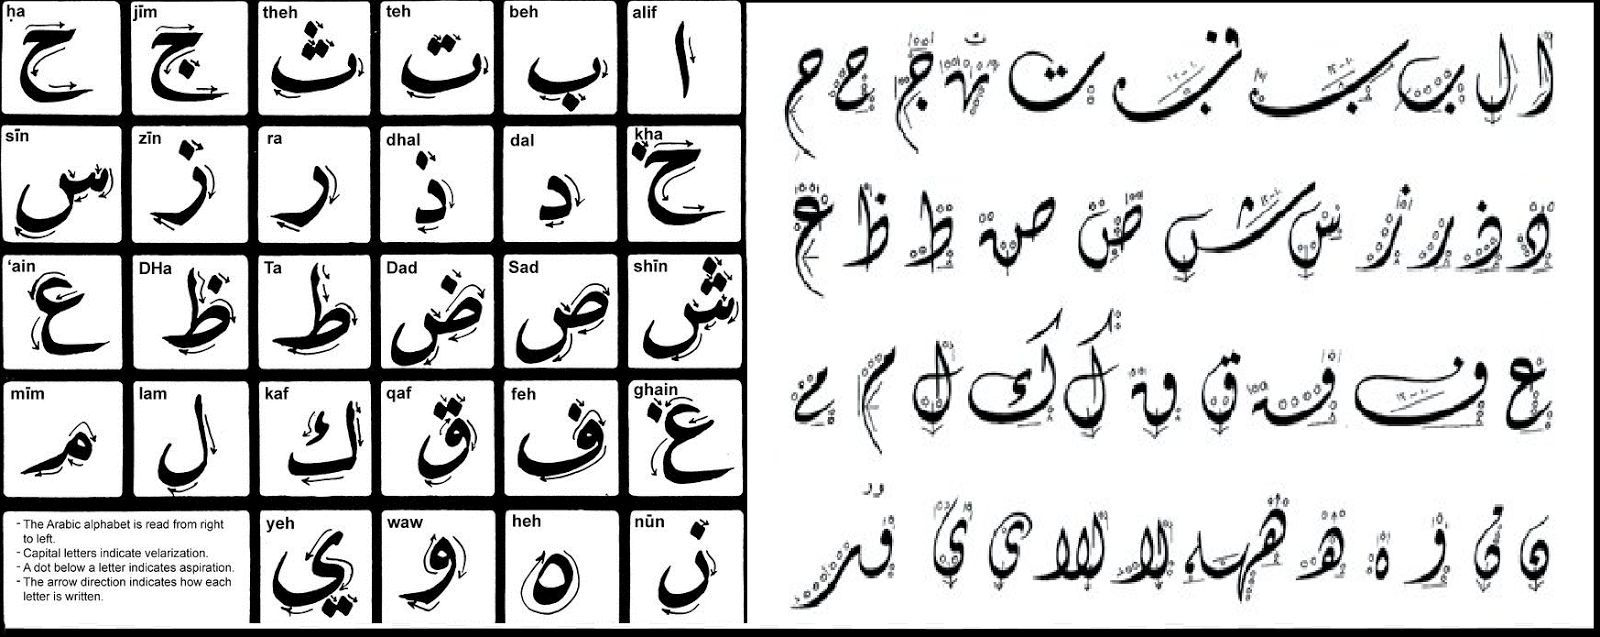 Arabic Calligraphy Alphabet